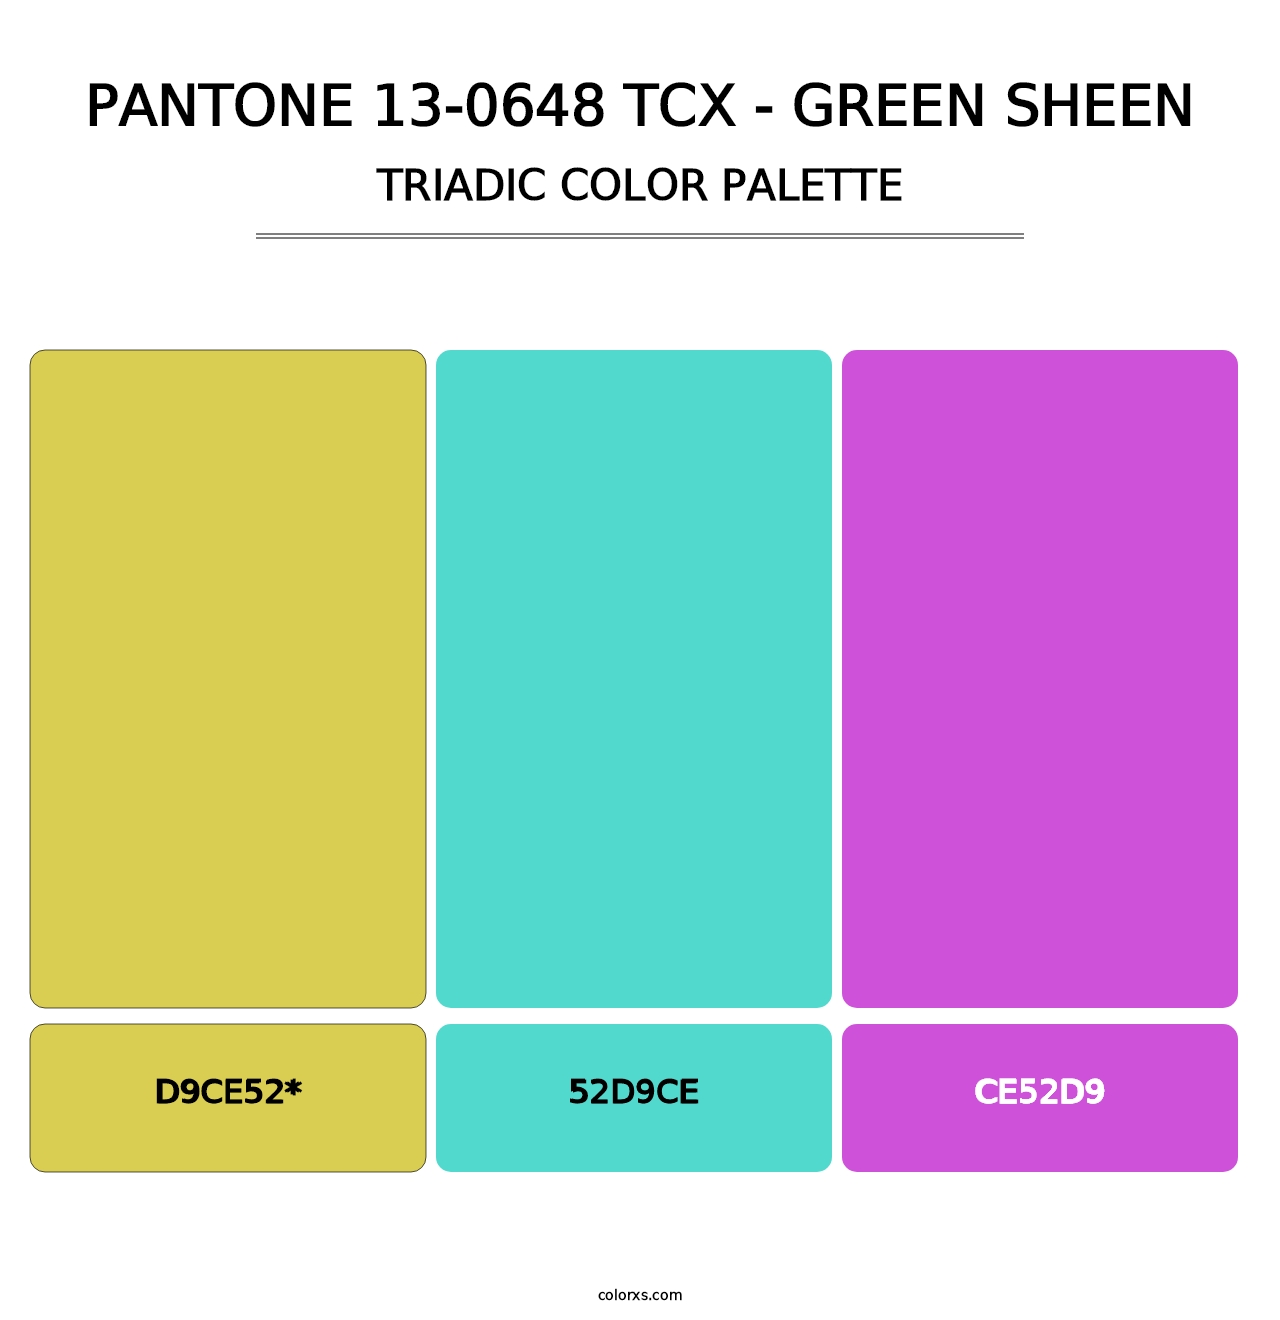 PANTONE 13-0648 TCX - Green Sheen - Triadic Color Palette